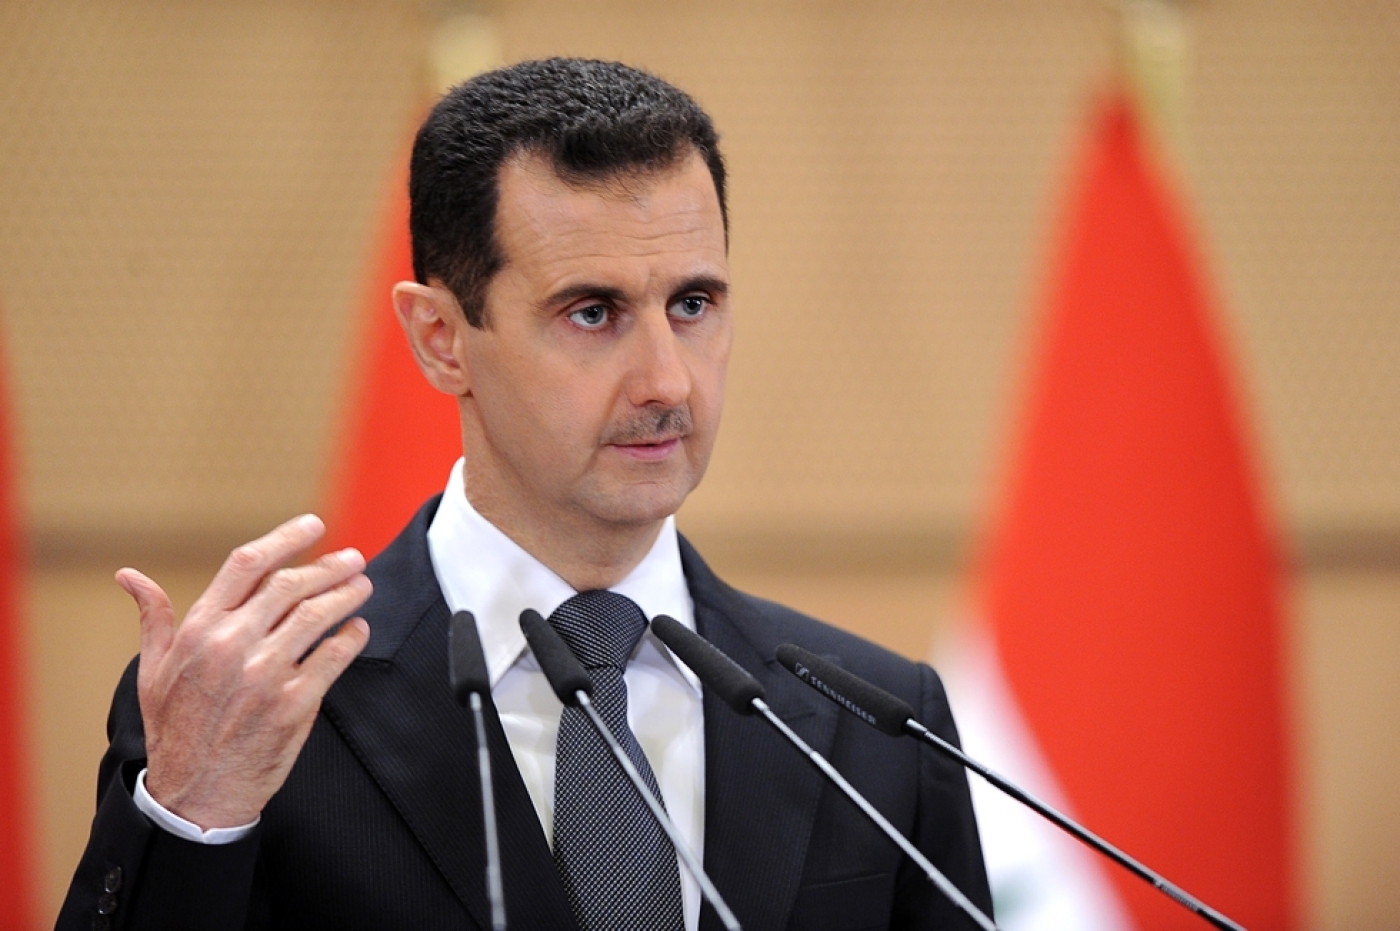 Syria forced to deny Bashar al-Assad sick after stroke rumours | Middle East Eye édition française